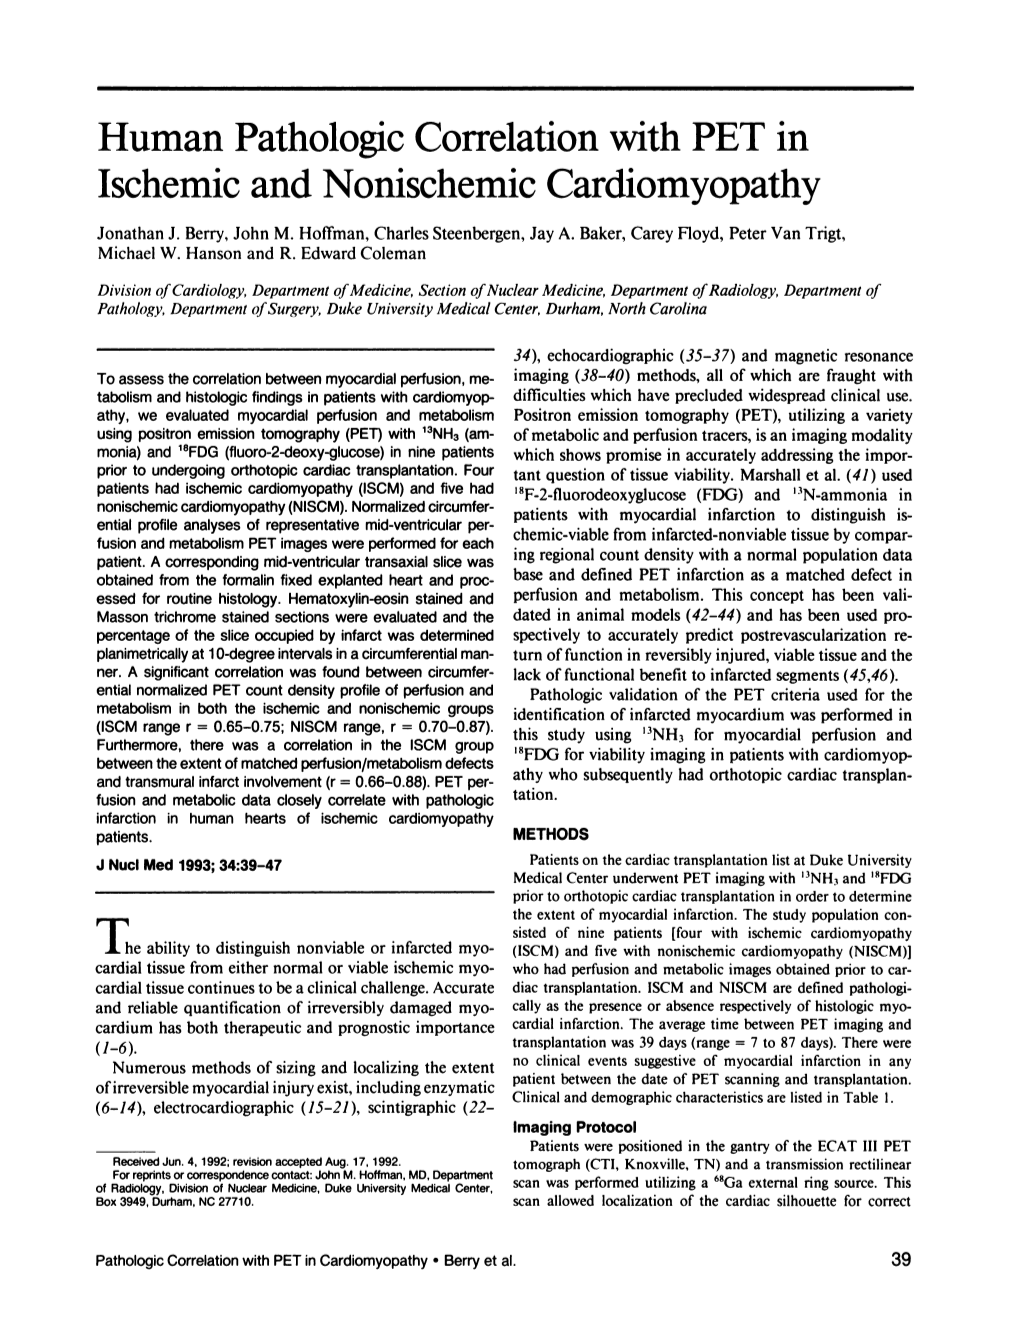 Ischemic and Nonischemic Cardiomyopathy